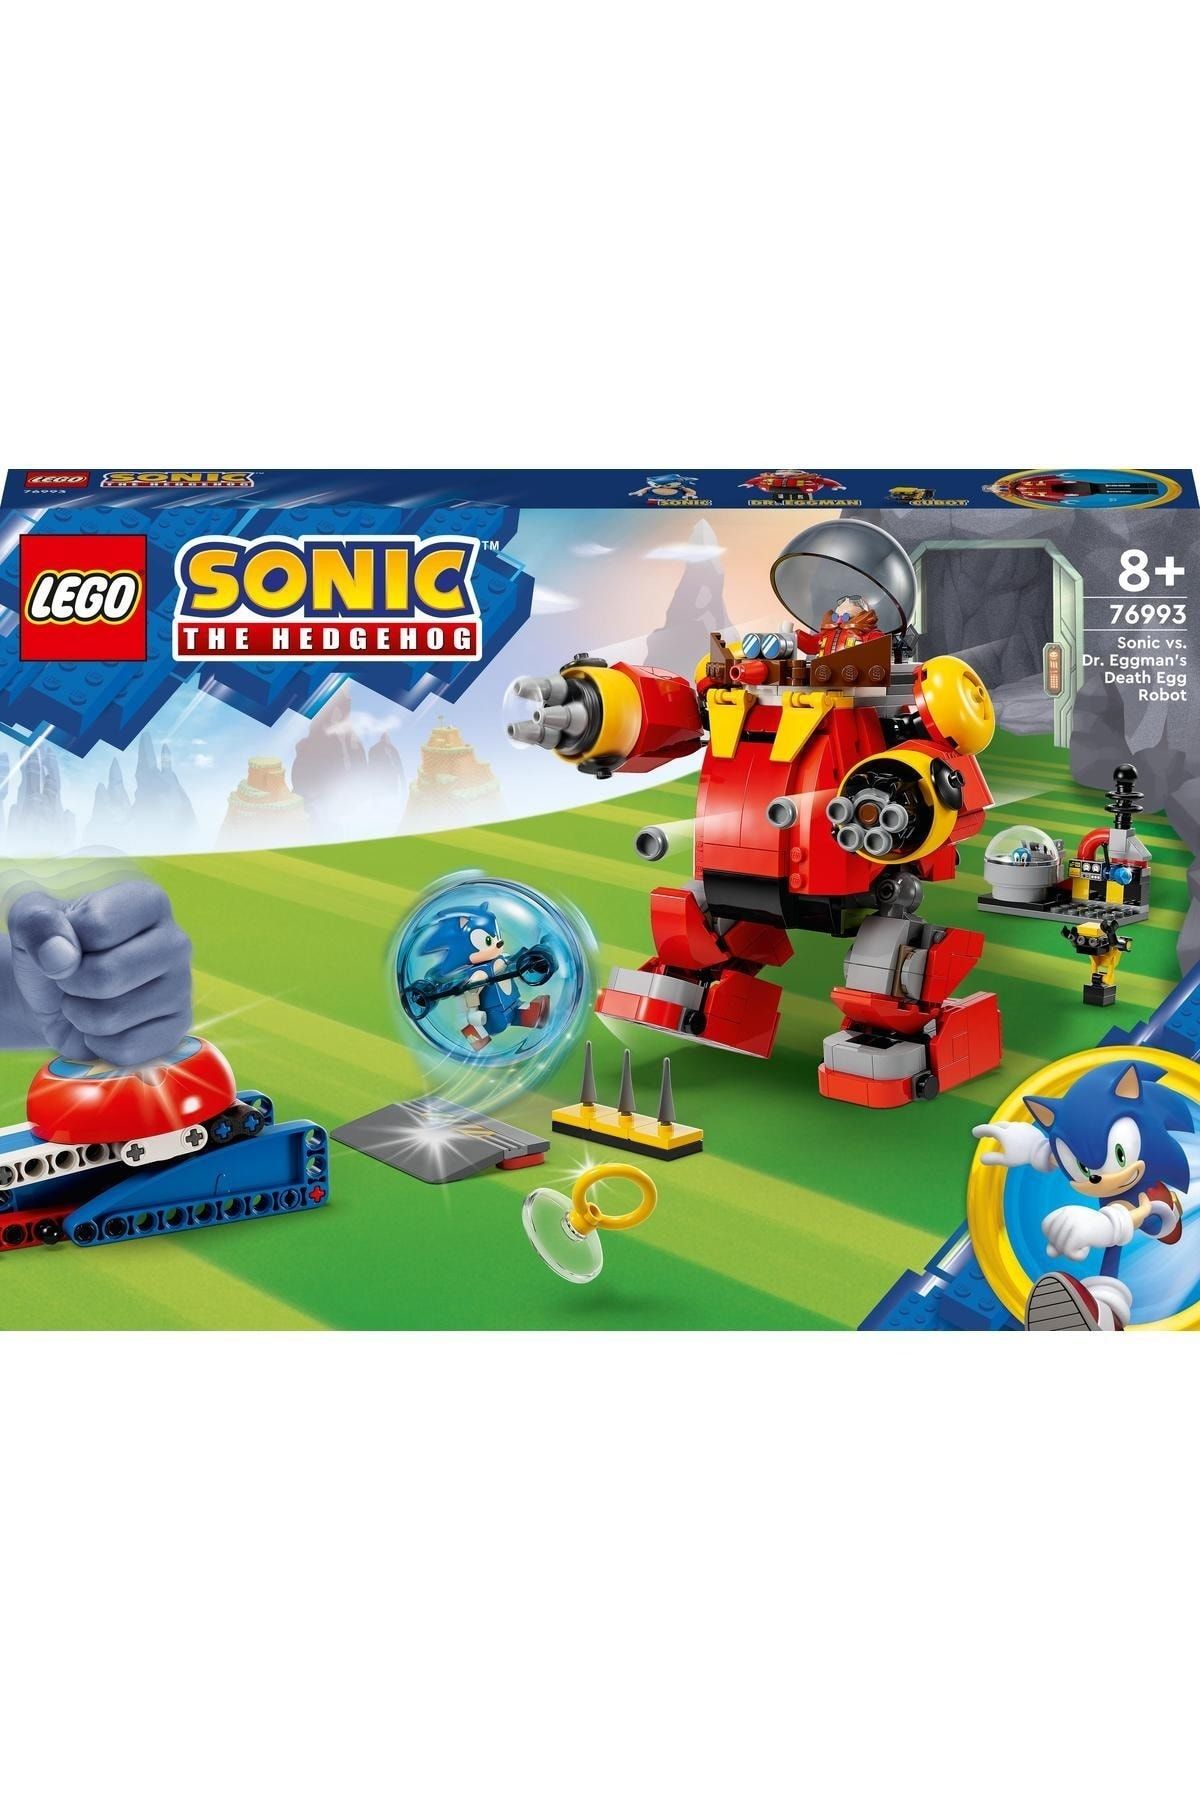 LEGO لگو Sonic The Hedgehog ربات تخم مرغ مرگ سونیک در مقابل دکتراگمن 76993 مجموعه ساختمانی (615 قطعه)